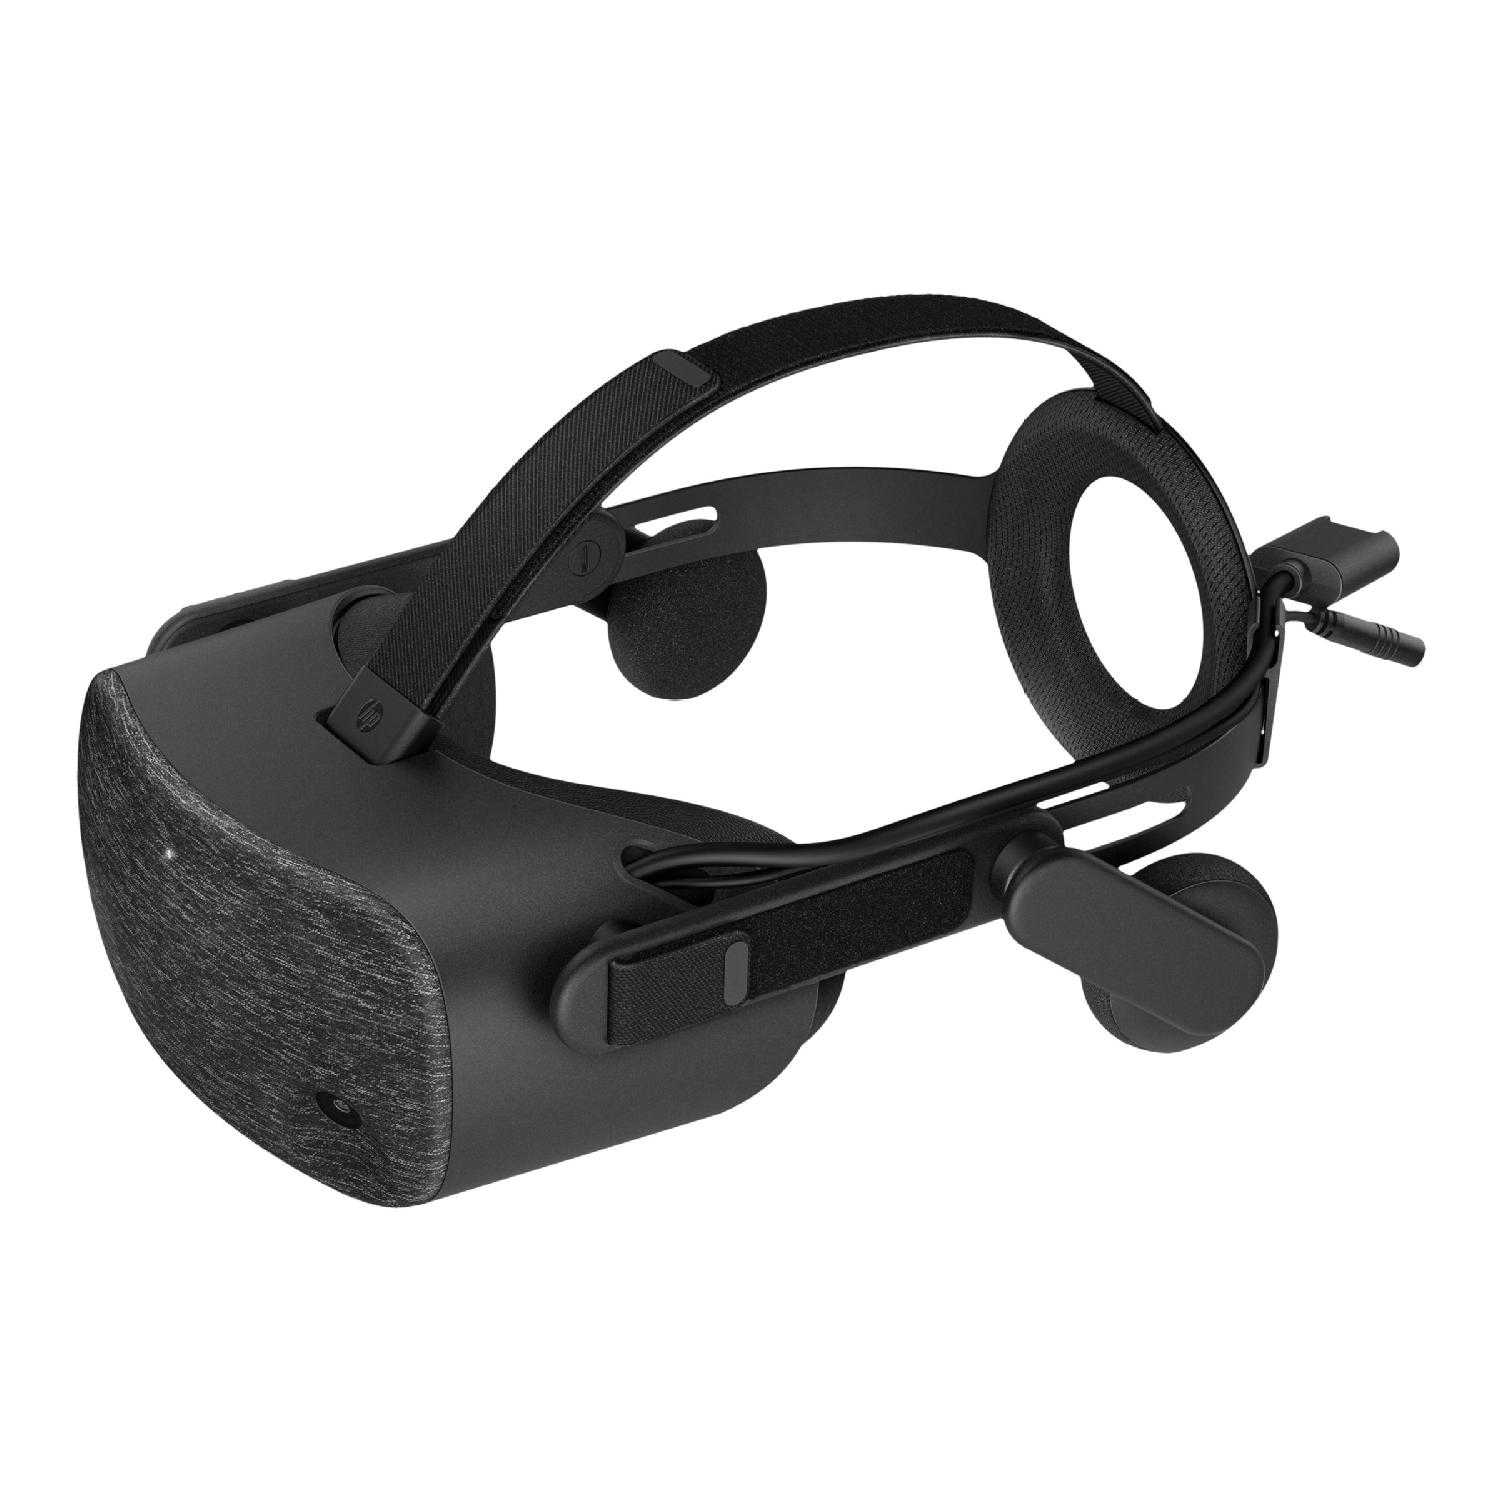 Hp reverb g1 virtual reality headset (copperbq)